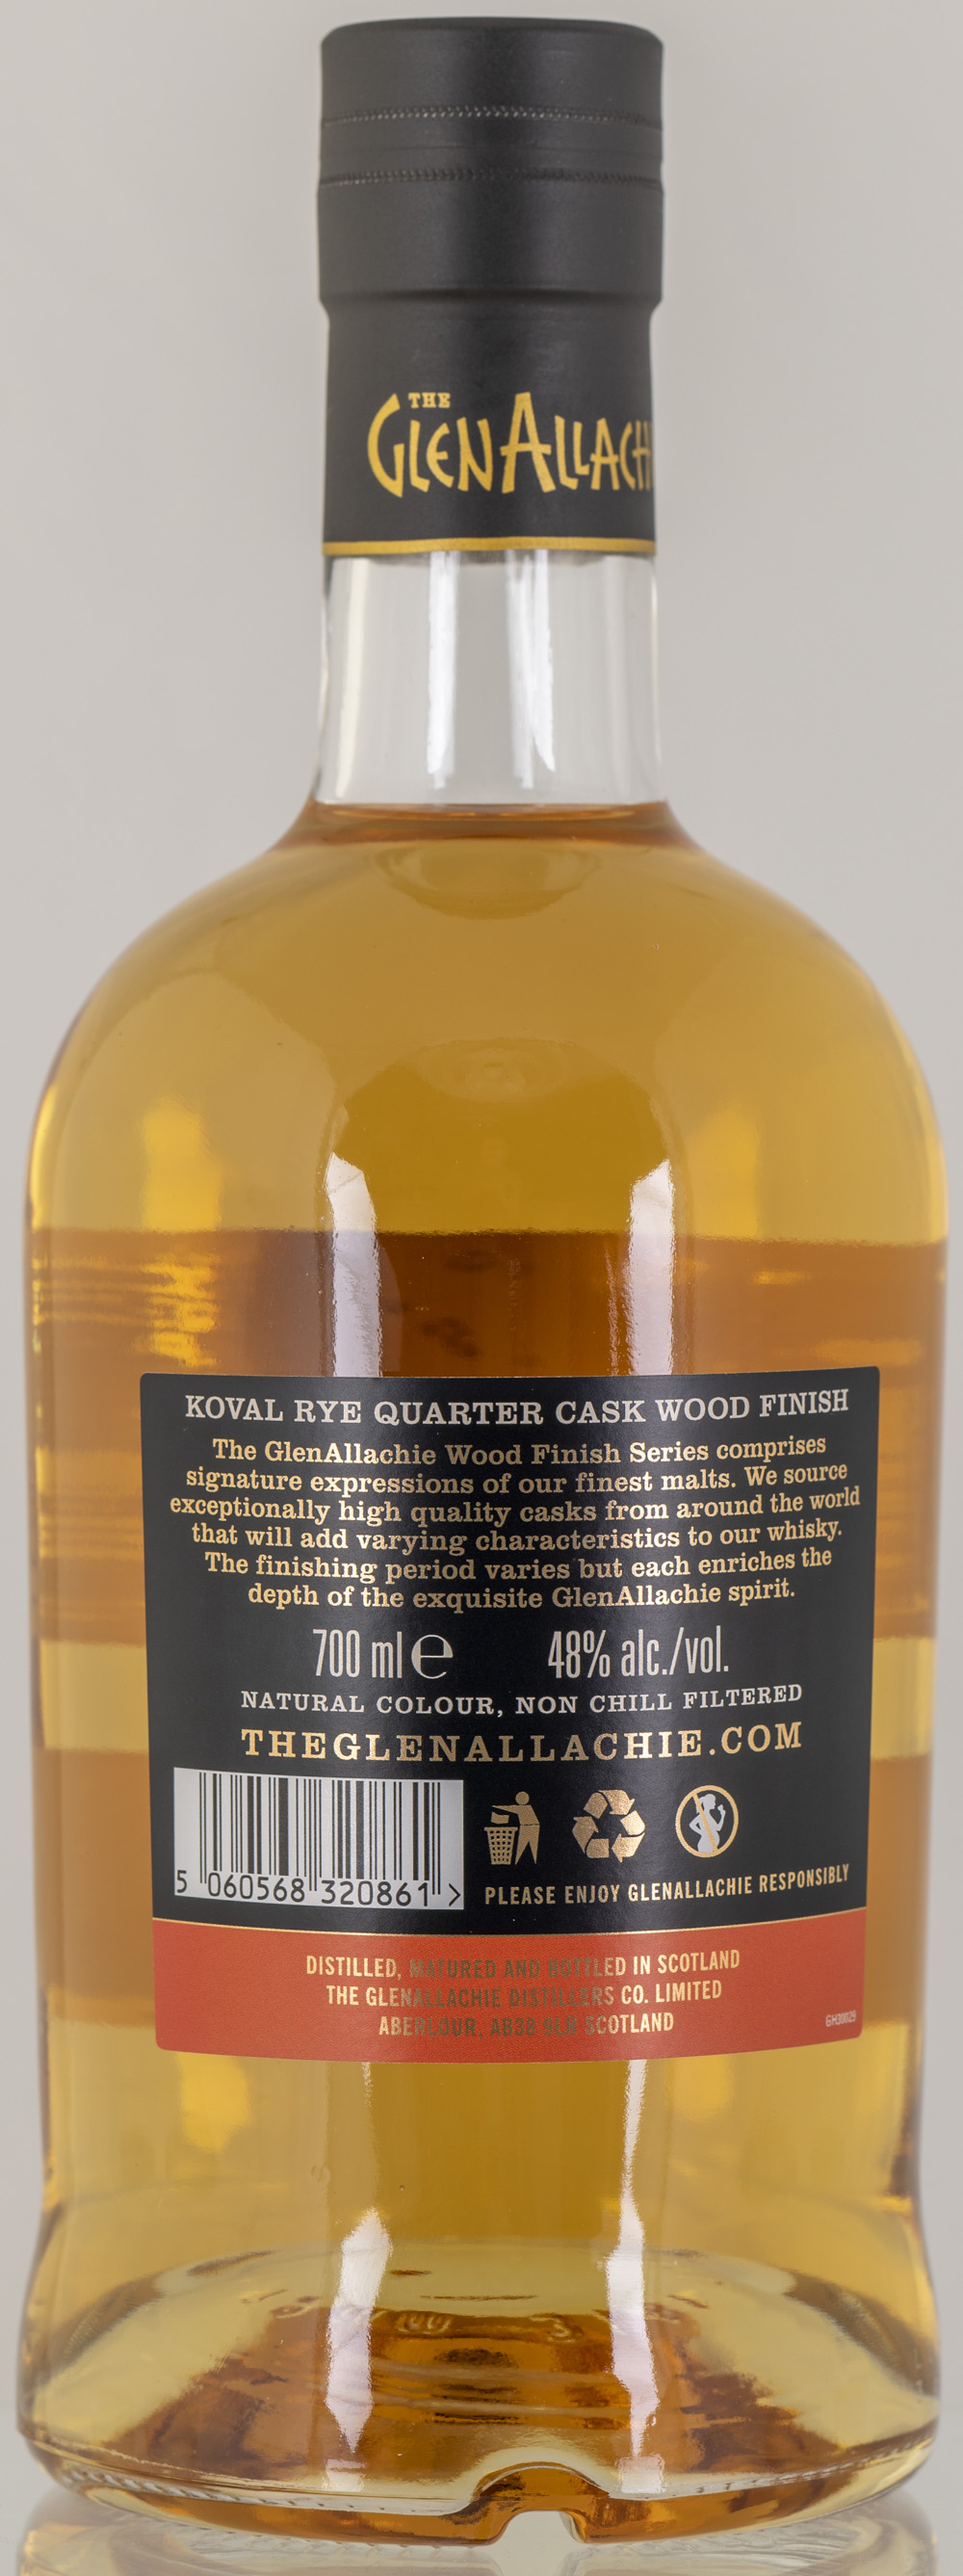 Billede: PHC_2279 - GelAllachie 8 Koval Rye Quarter Cask Wood Finish - bottle back.jpg